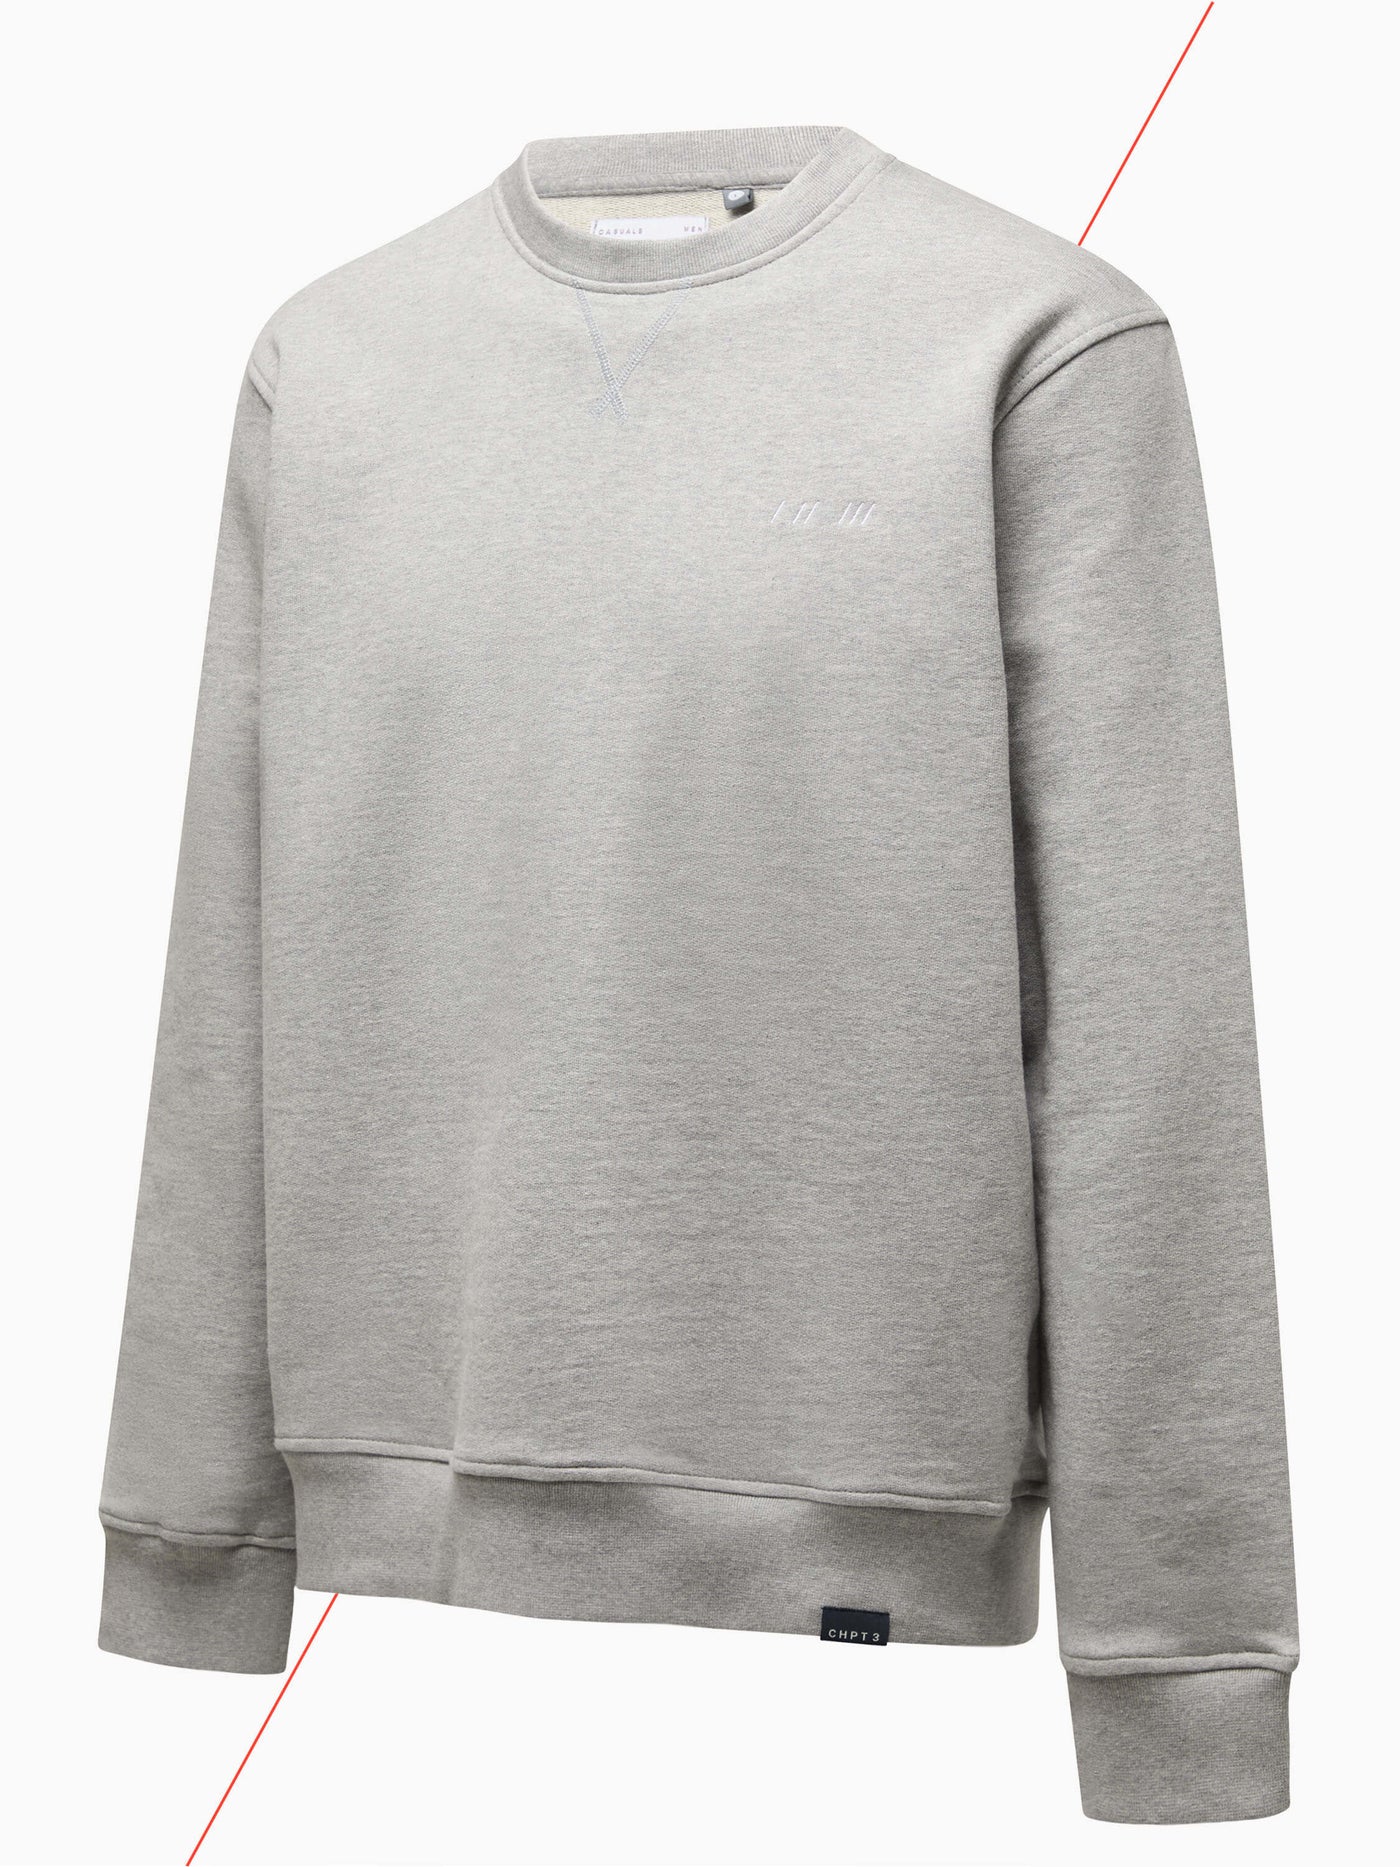 CHPT3 Elysée mens cotton sweatshirt in grey, viewed from the side #color_grey-marl